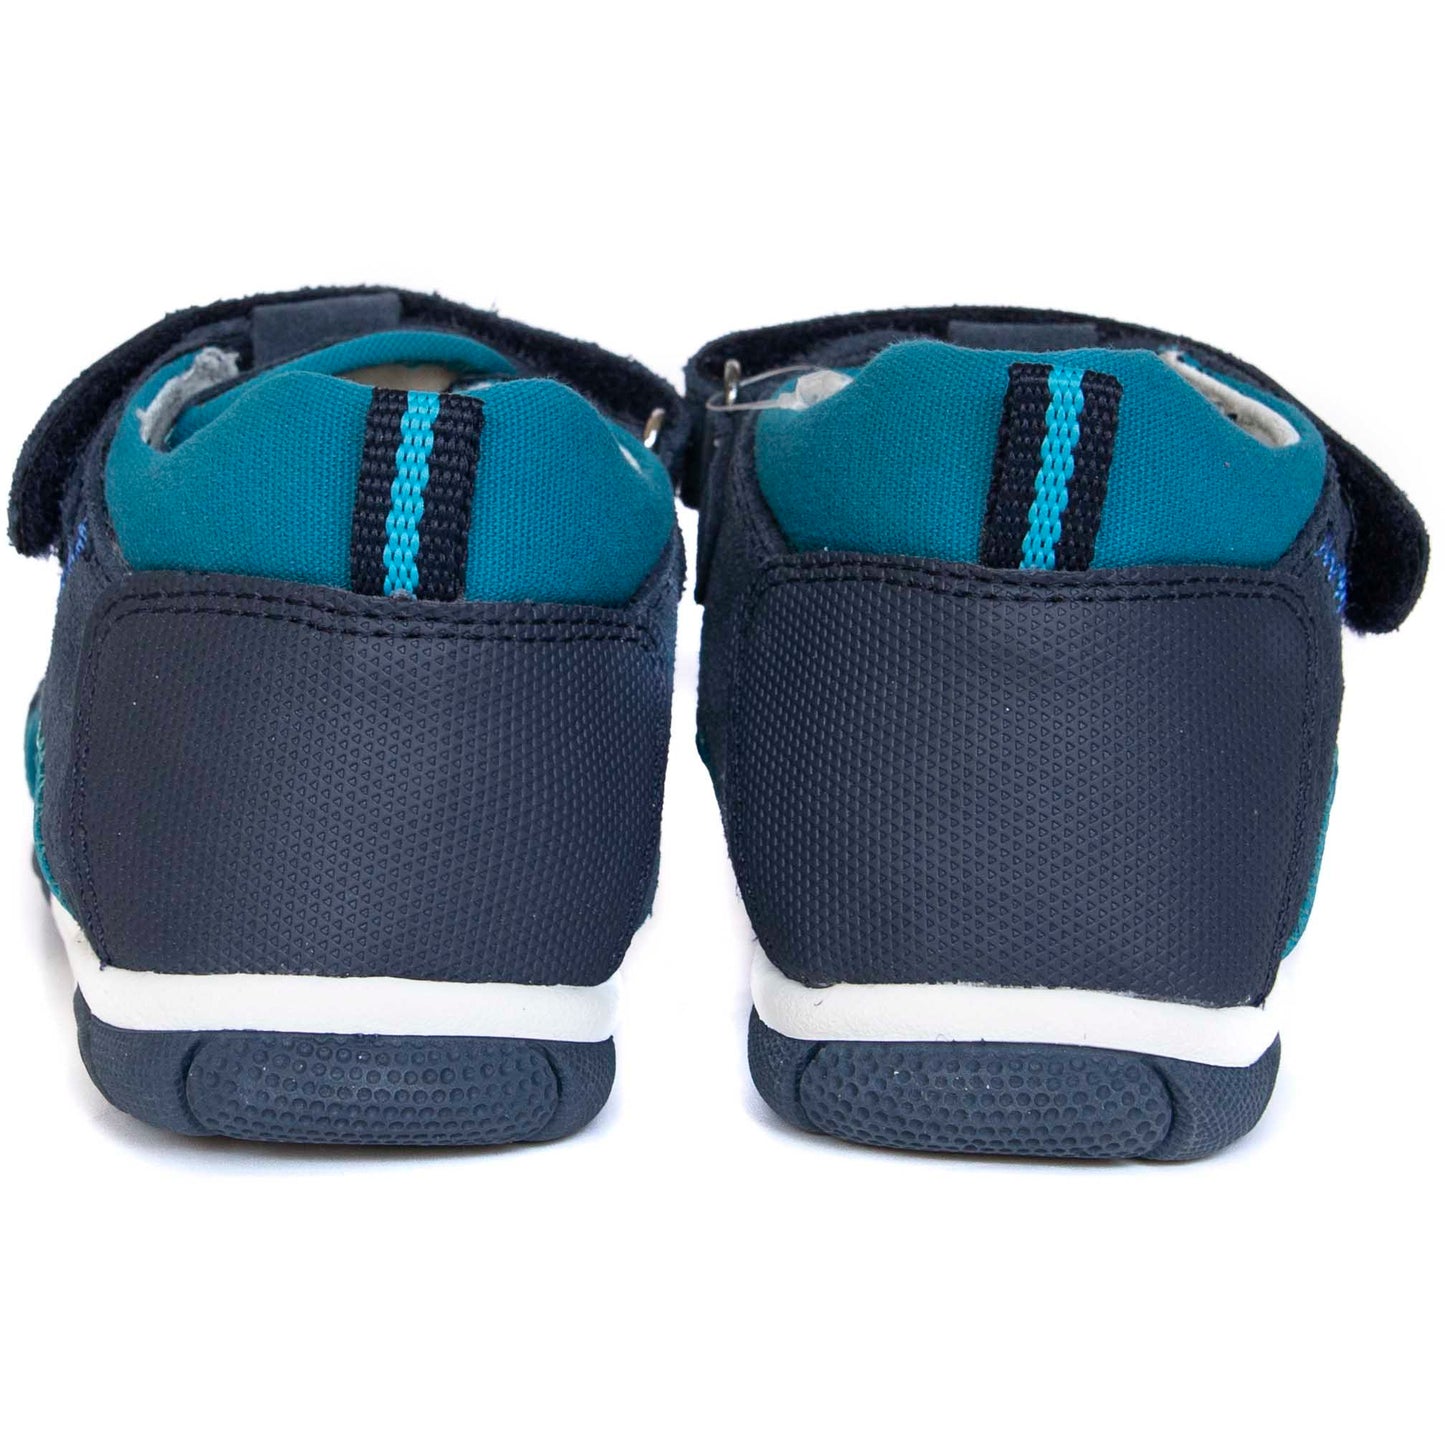 STOLER navy toddler boy arch support sandals